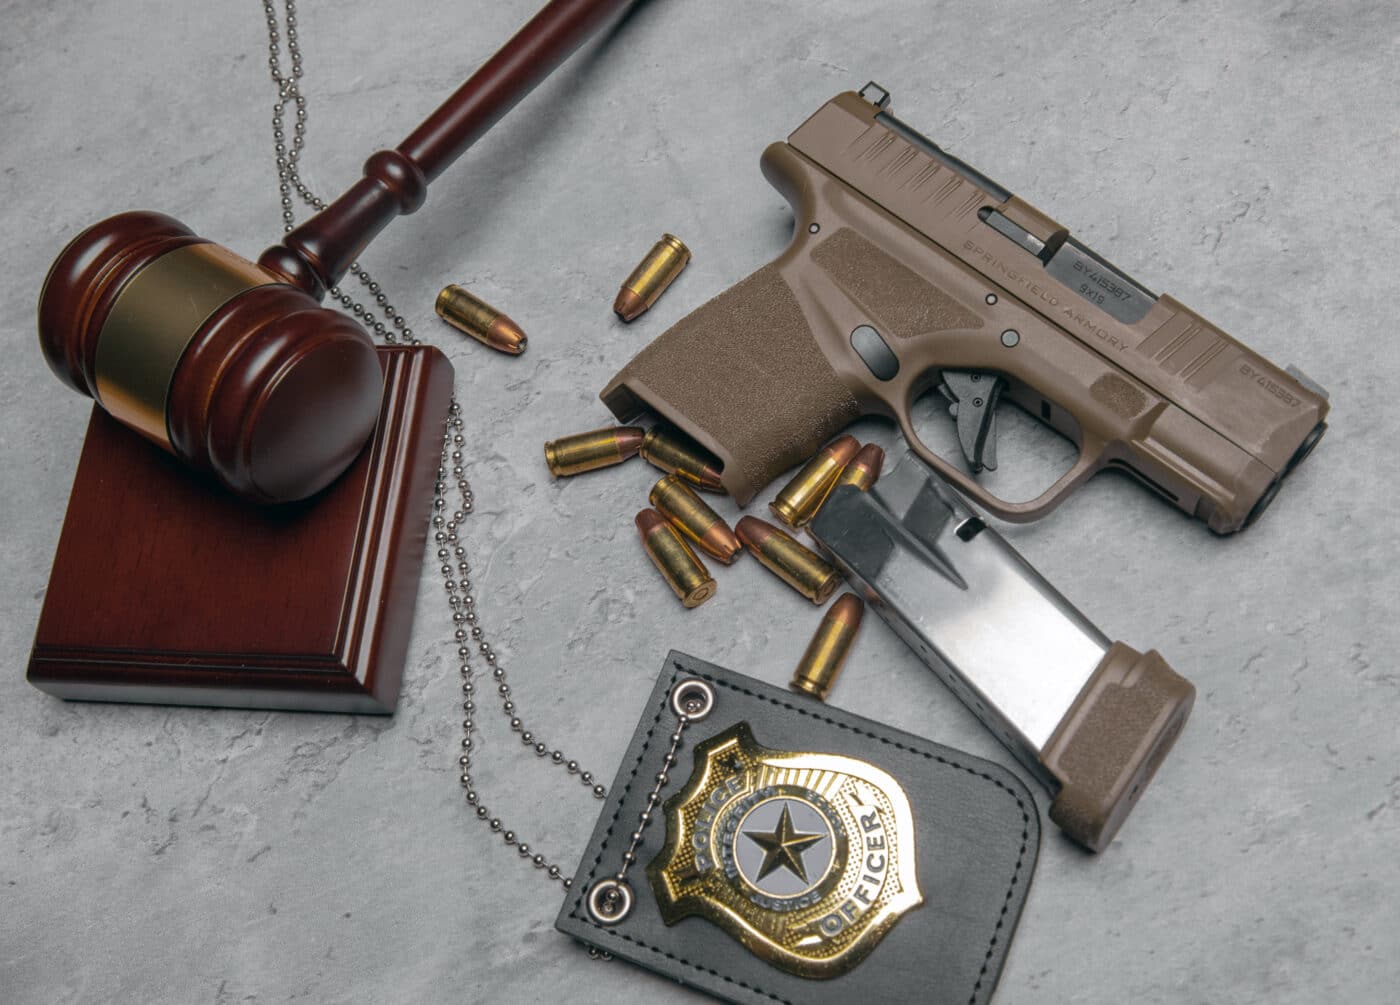 Hellcat pistol next to magazine, ammo, gavel, and police badge